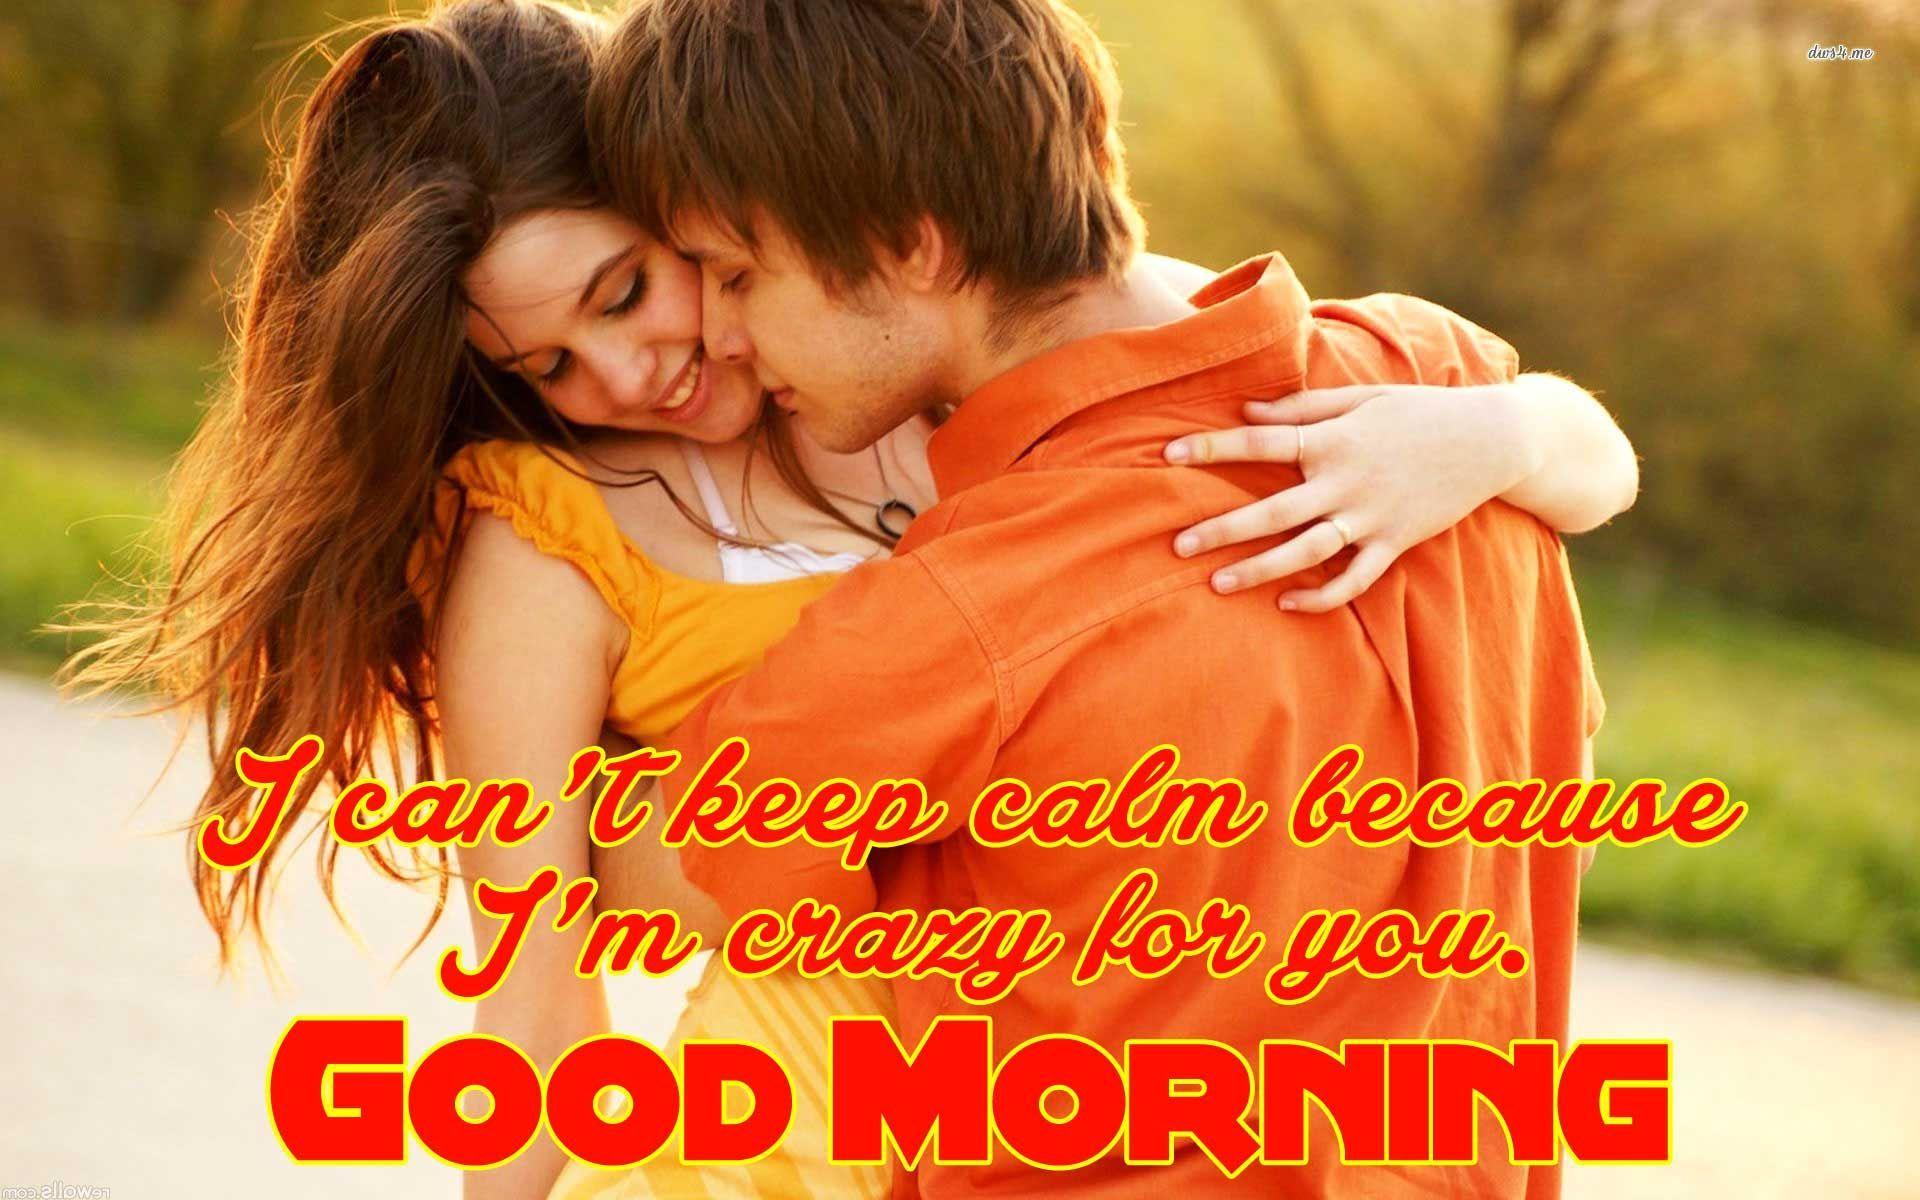 Beautiful Good Morning Image with Love Couple. Romance